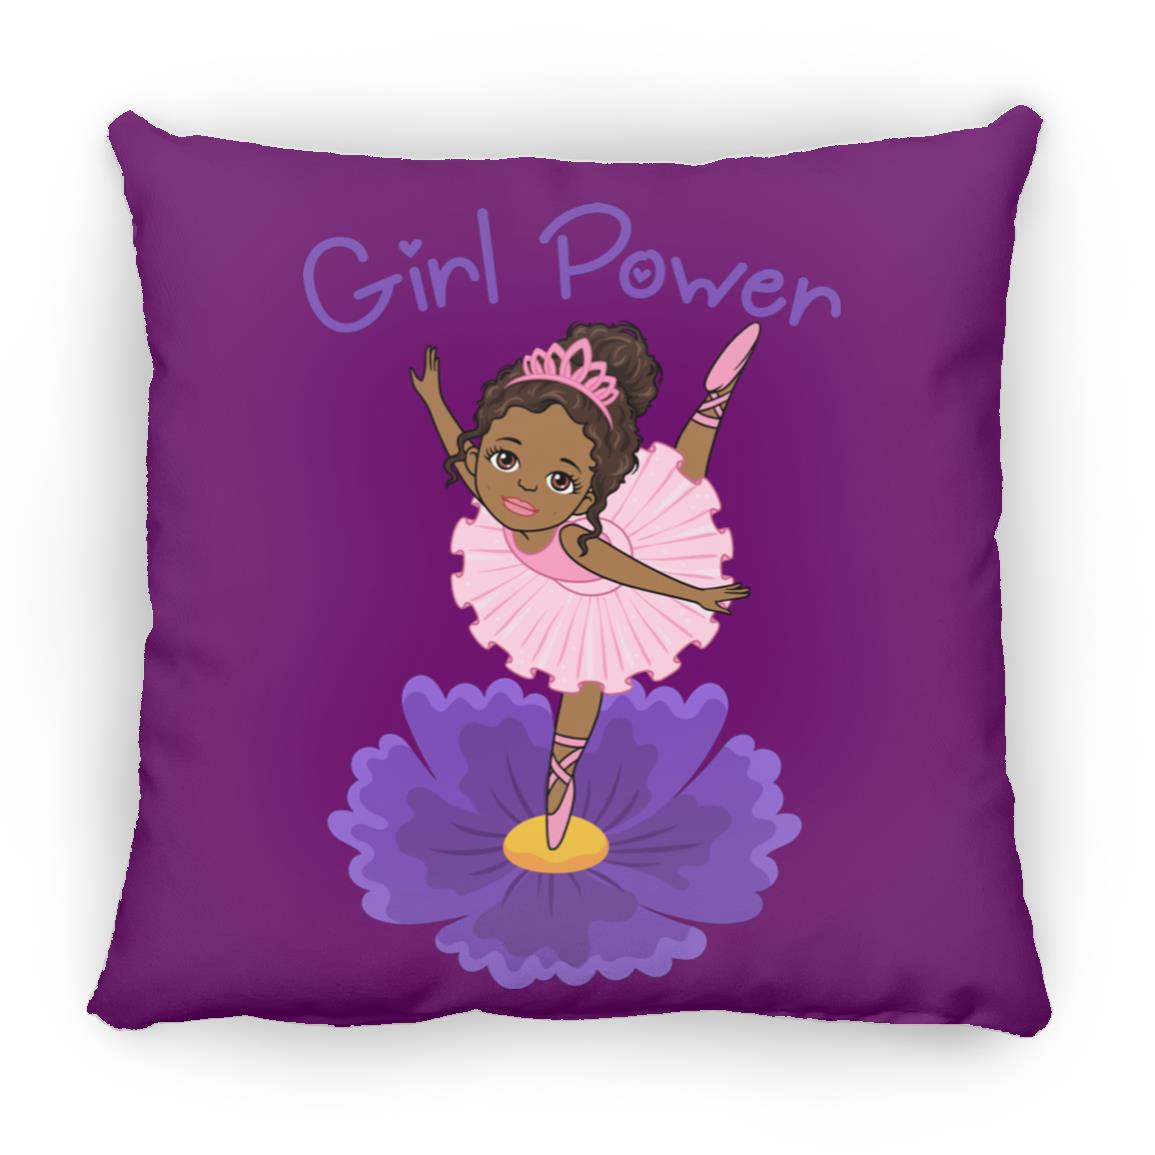 Girls Throw Pillows | Beautiful Me | Ariana The Ballerina | Girl Power